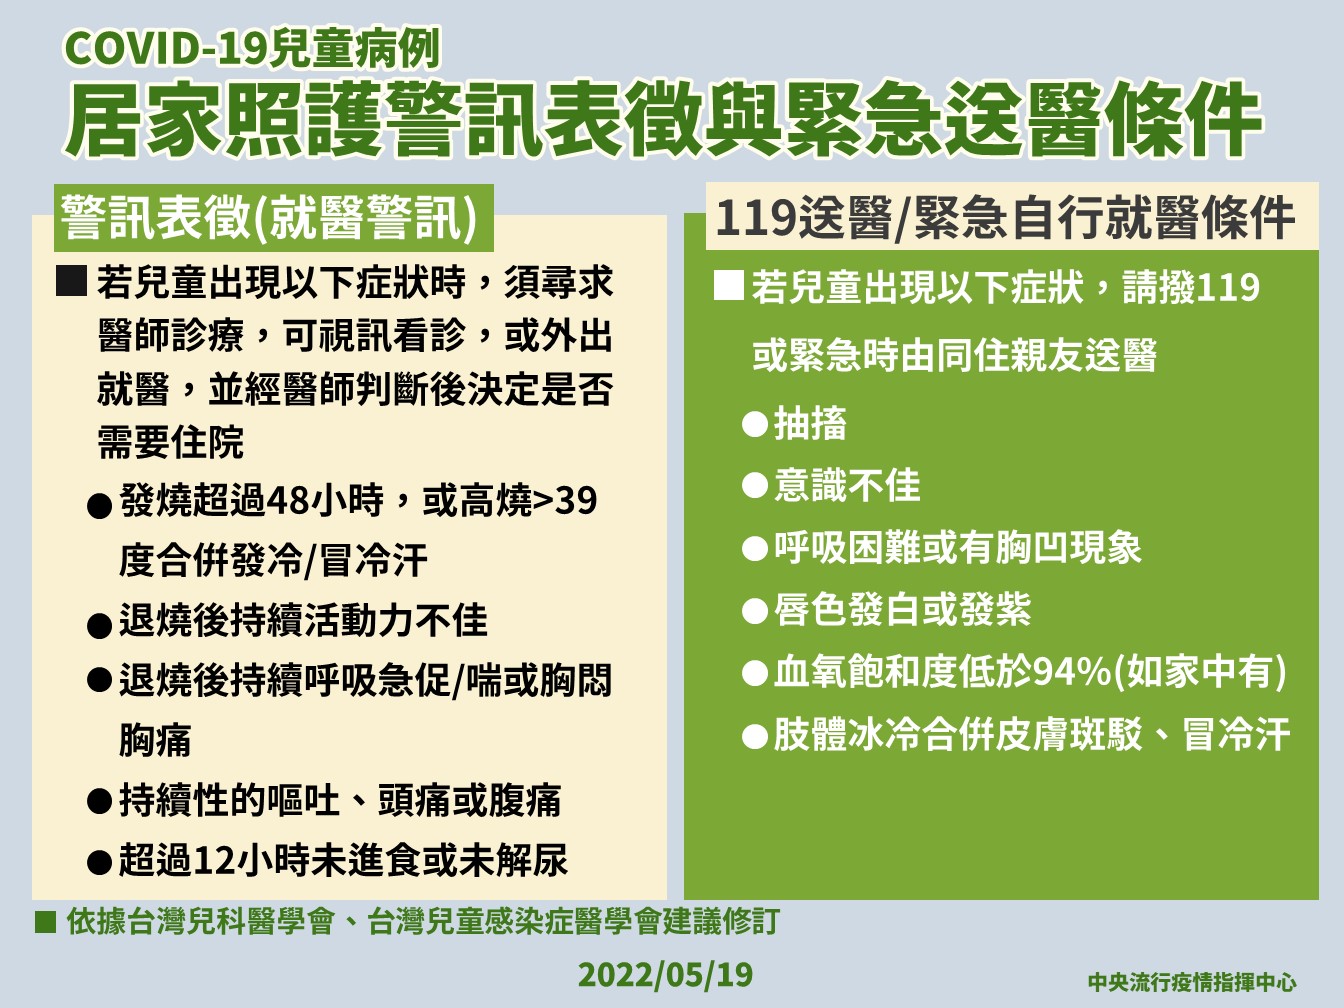 COVID-19兒童病例居家照護警訊表徵與緊急送醫條件-中文.jpg